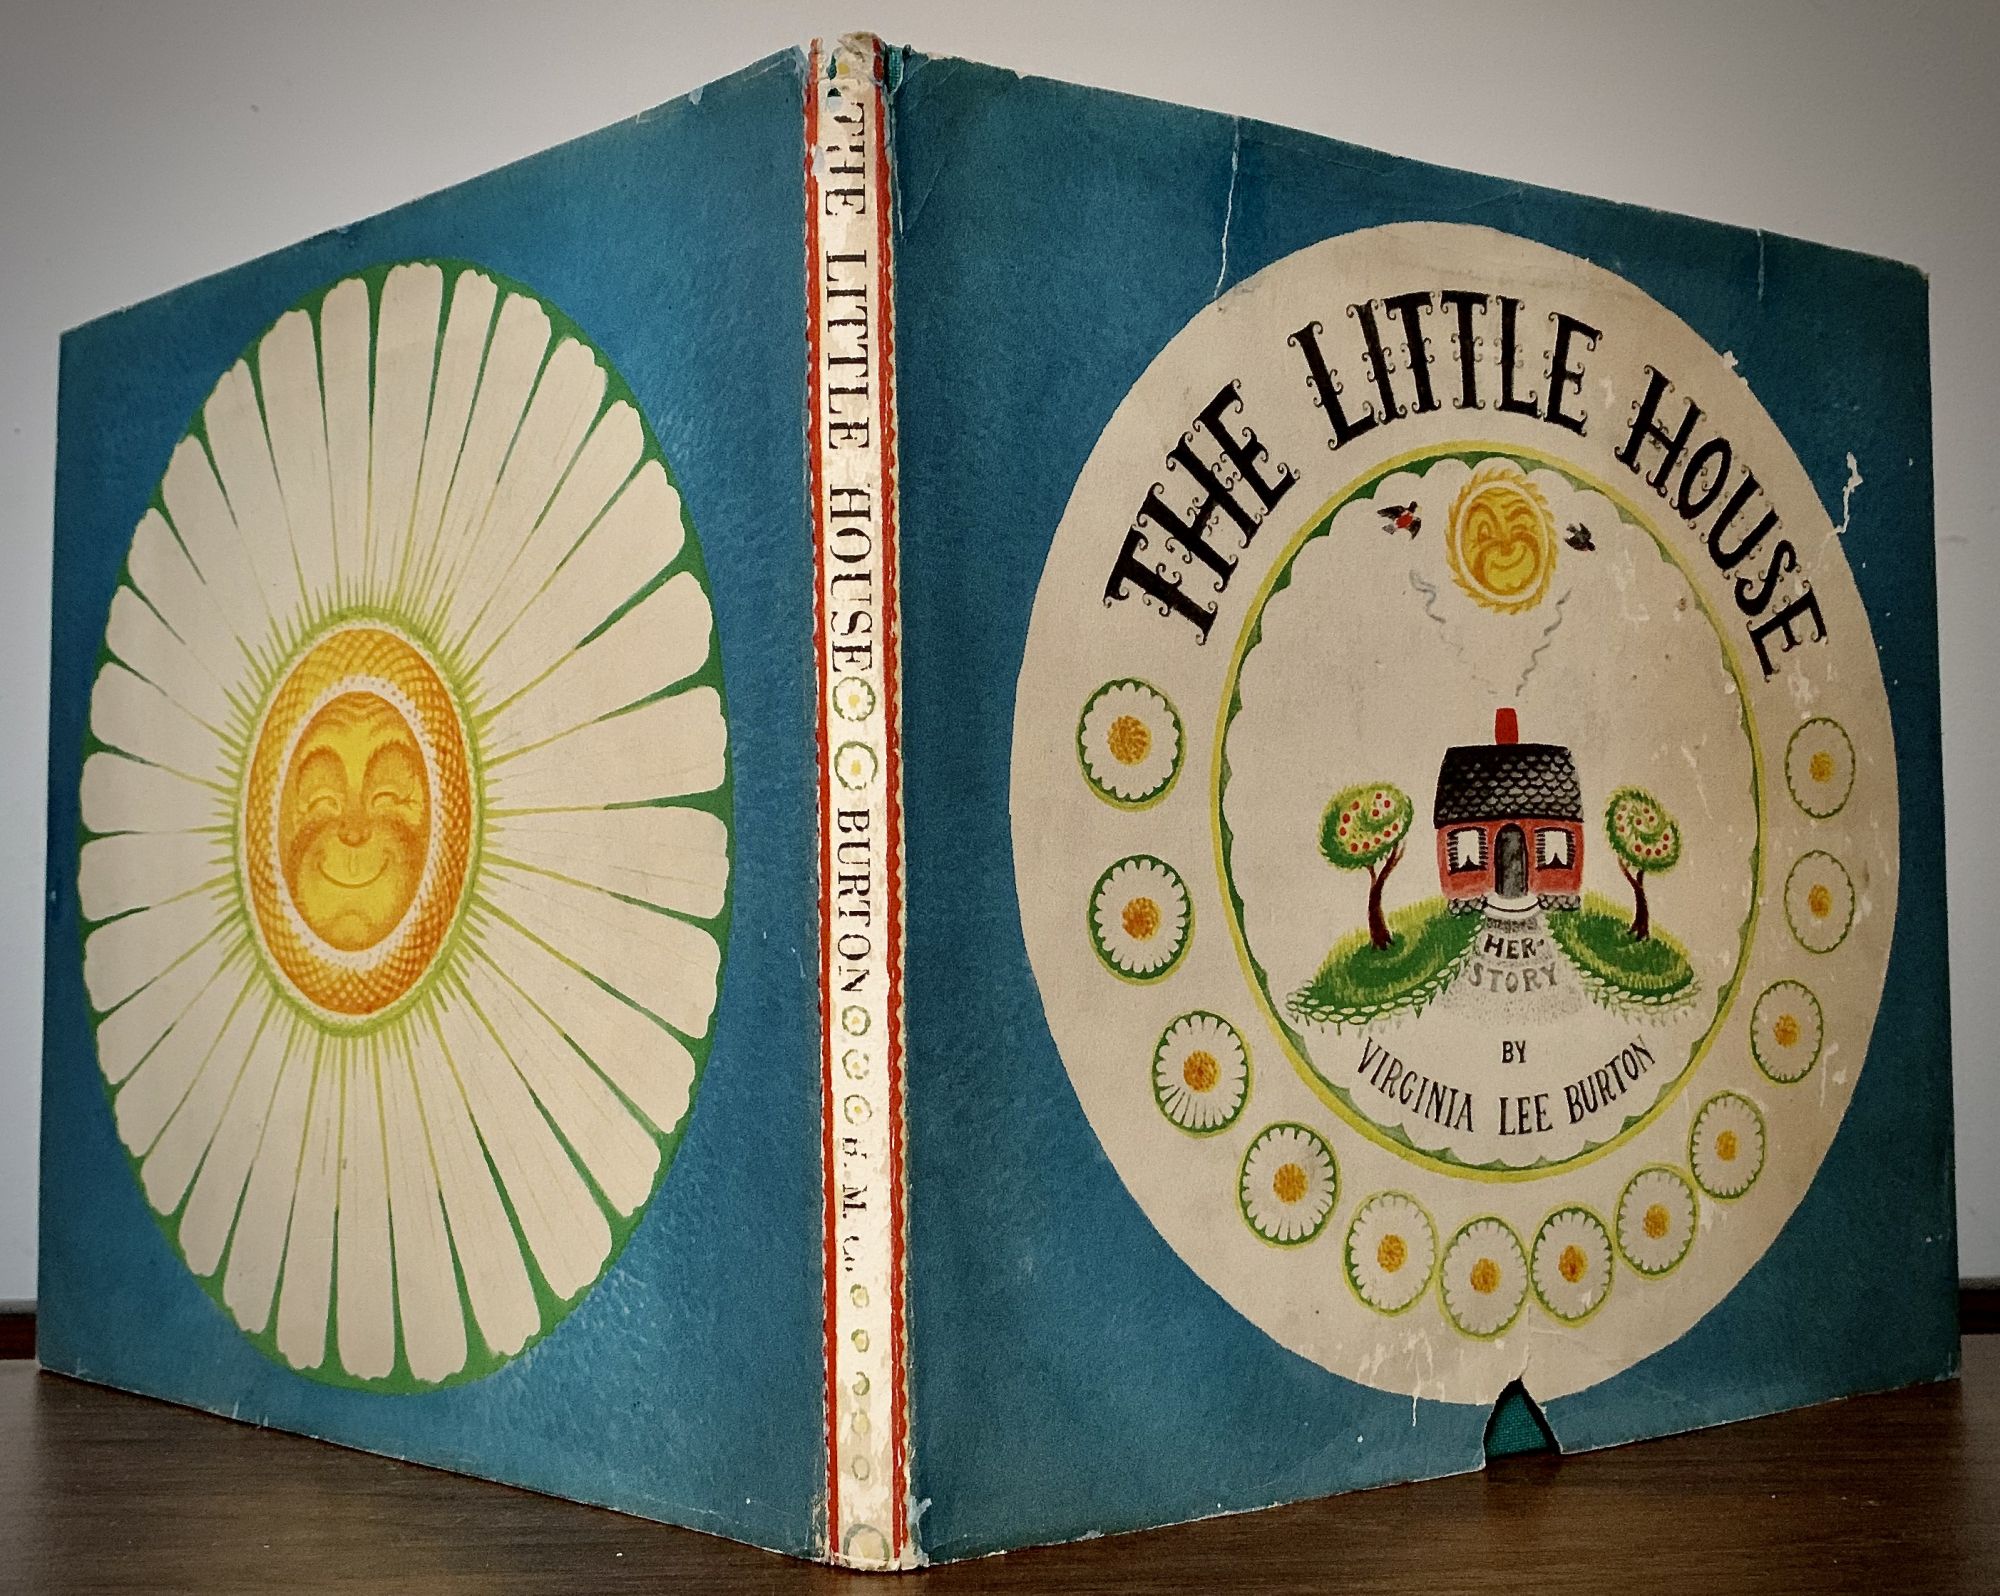 The Little House - Burton, Virginia Lee